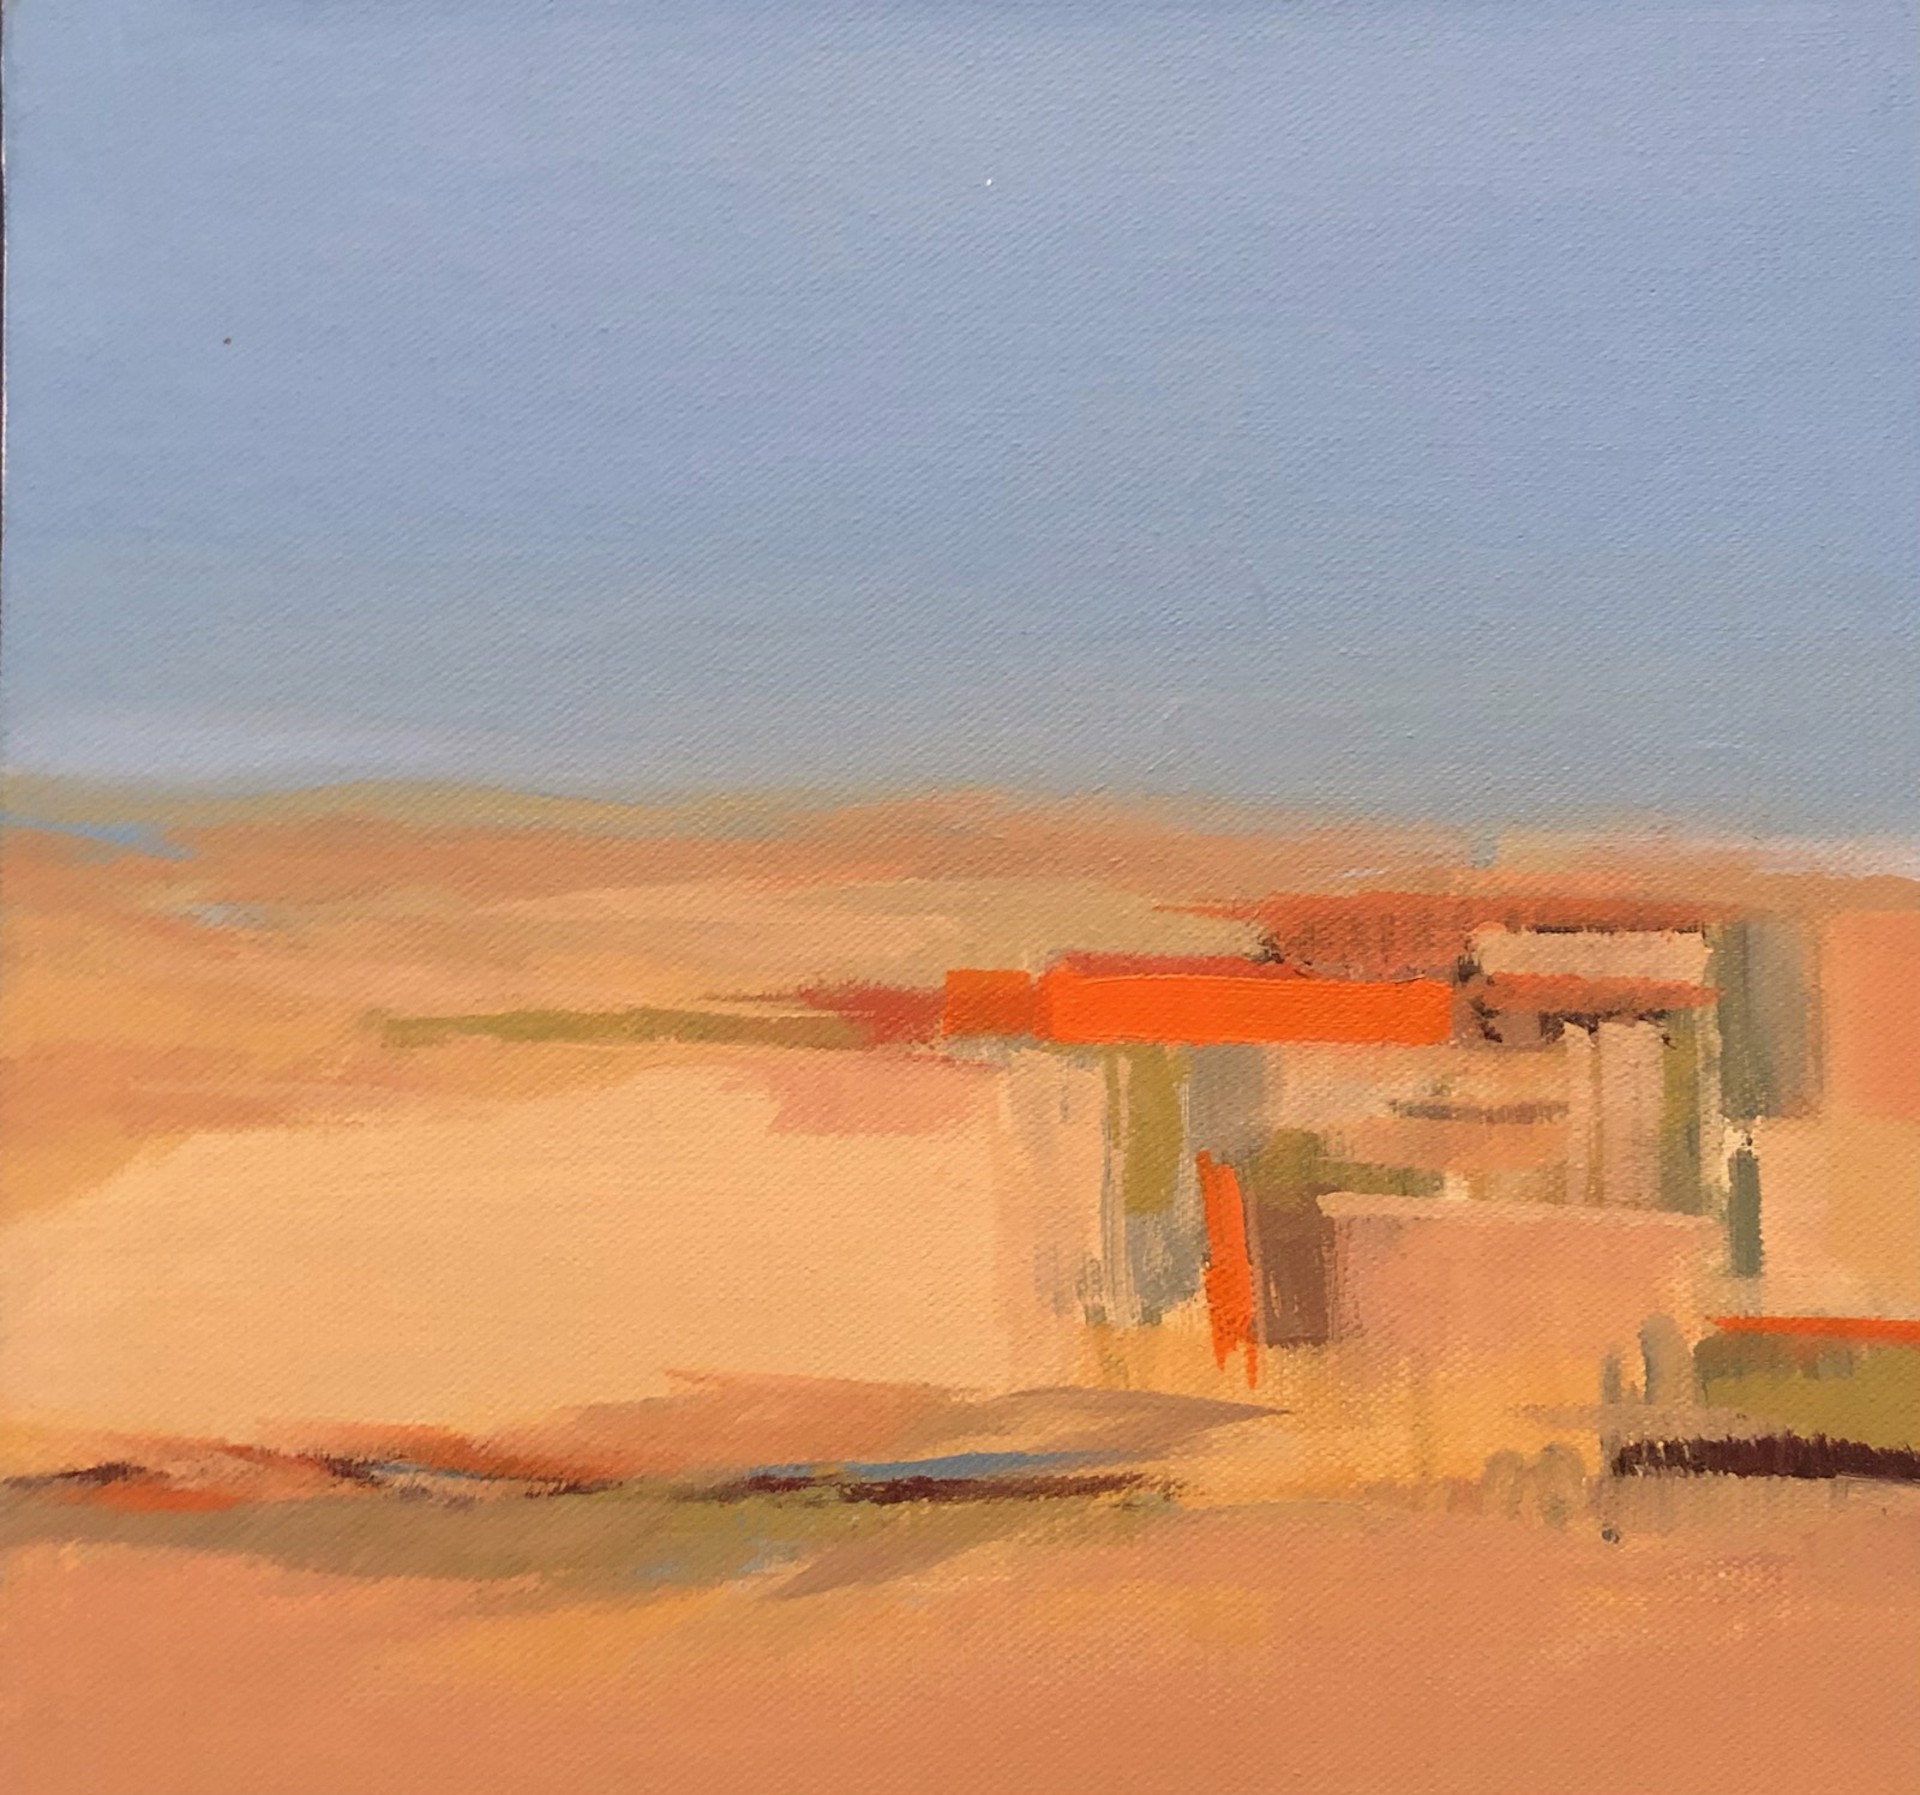 Desert Note by William Crosby